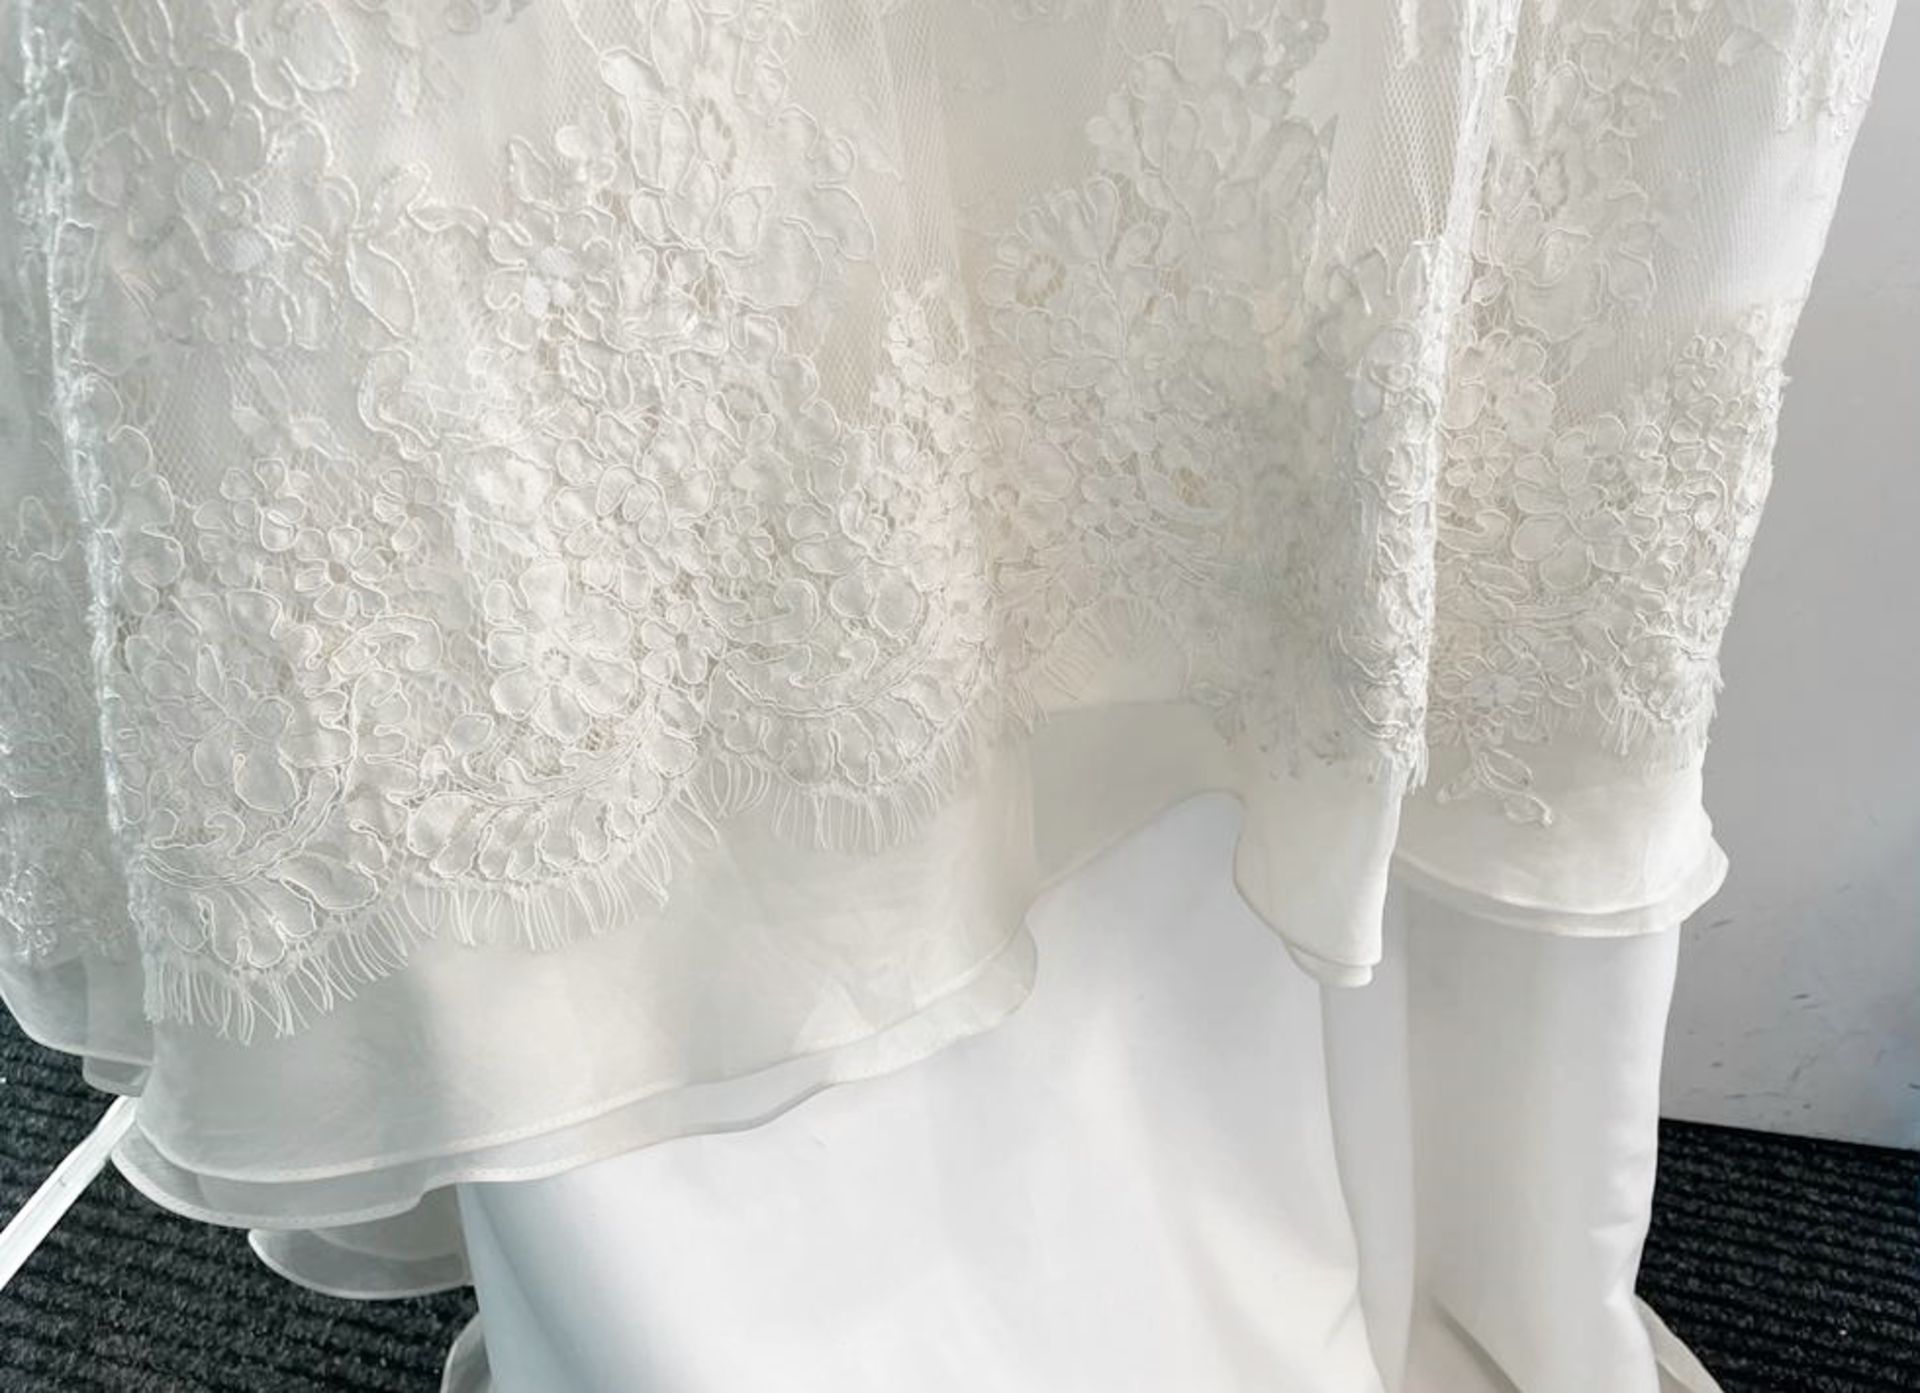 1 x ANNASUL Y 'Zelma' Designer Wedding Dress Bridal Gown - Size: UK 12 - Original RRP £1,750 - Image 5 of 11